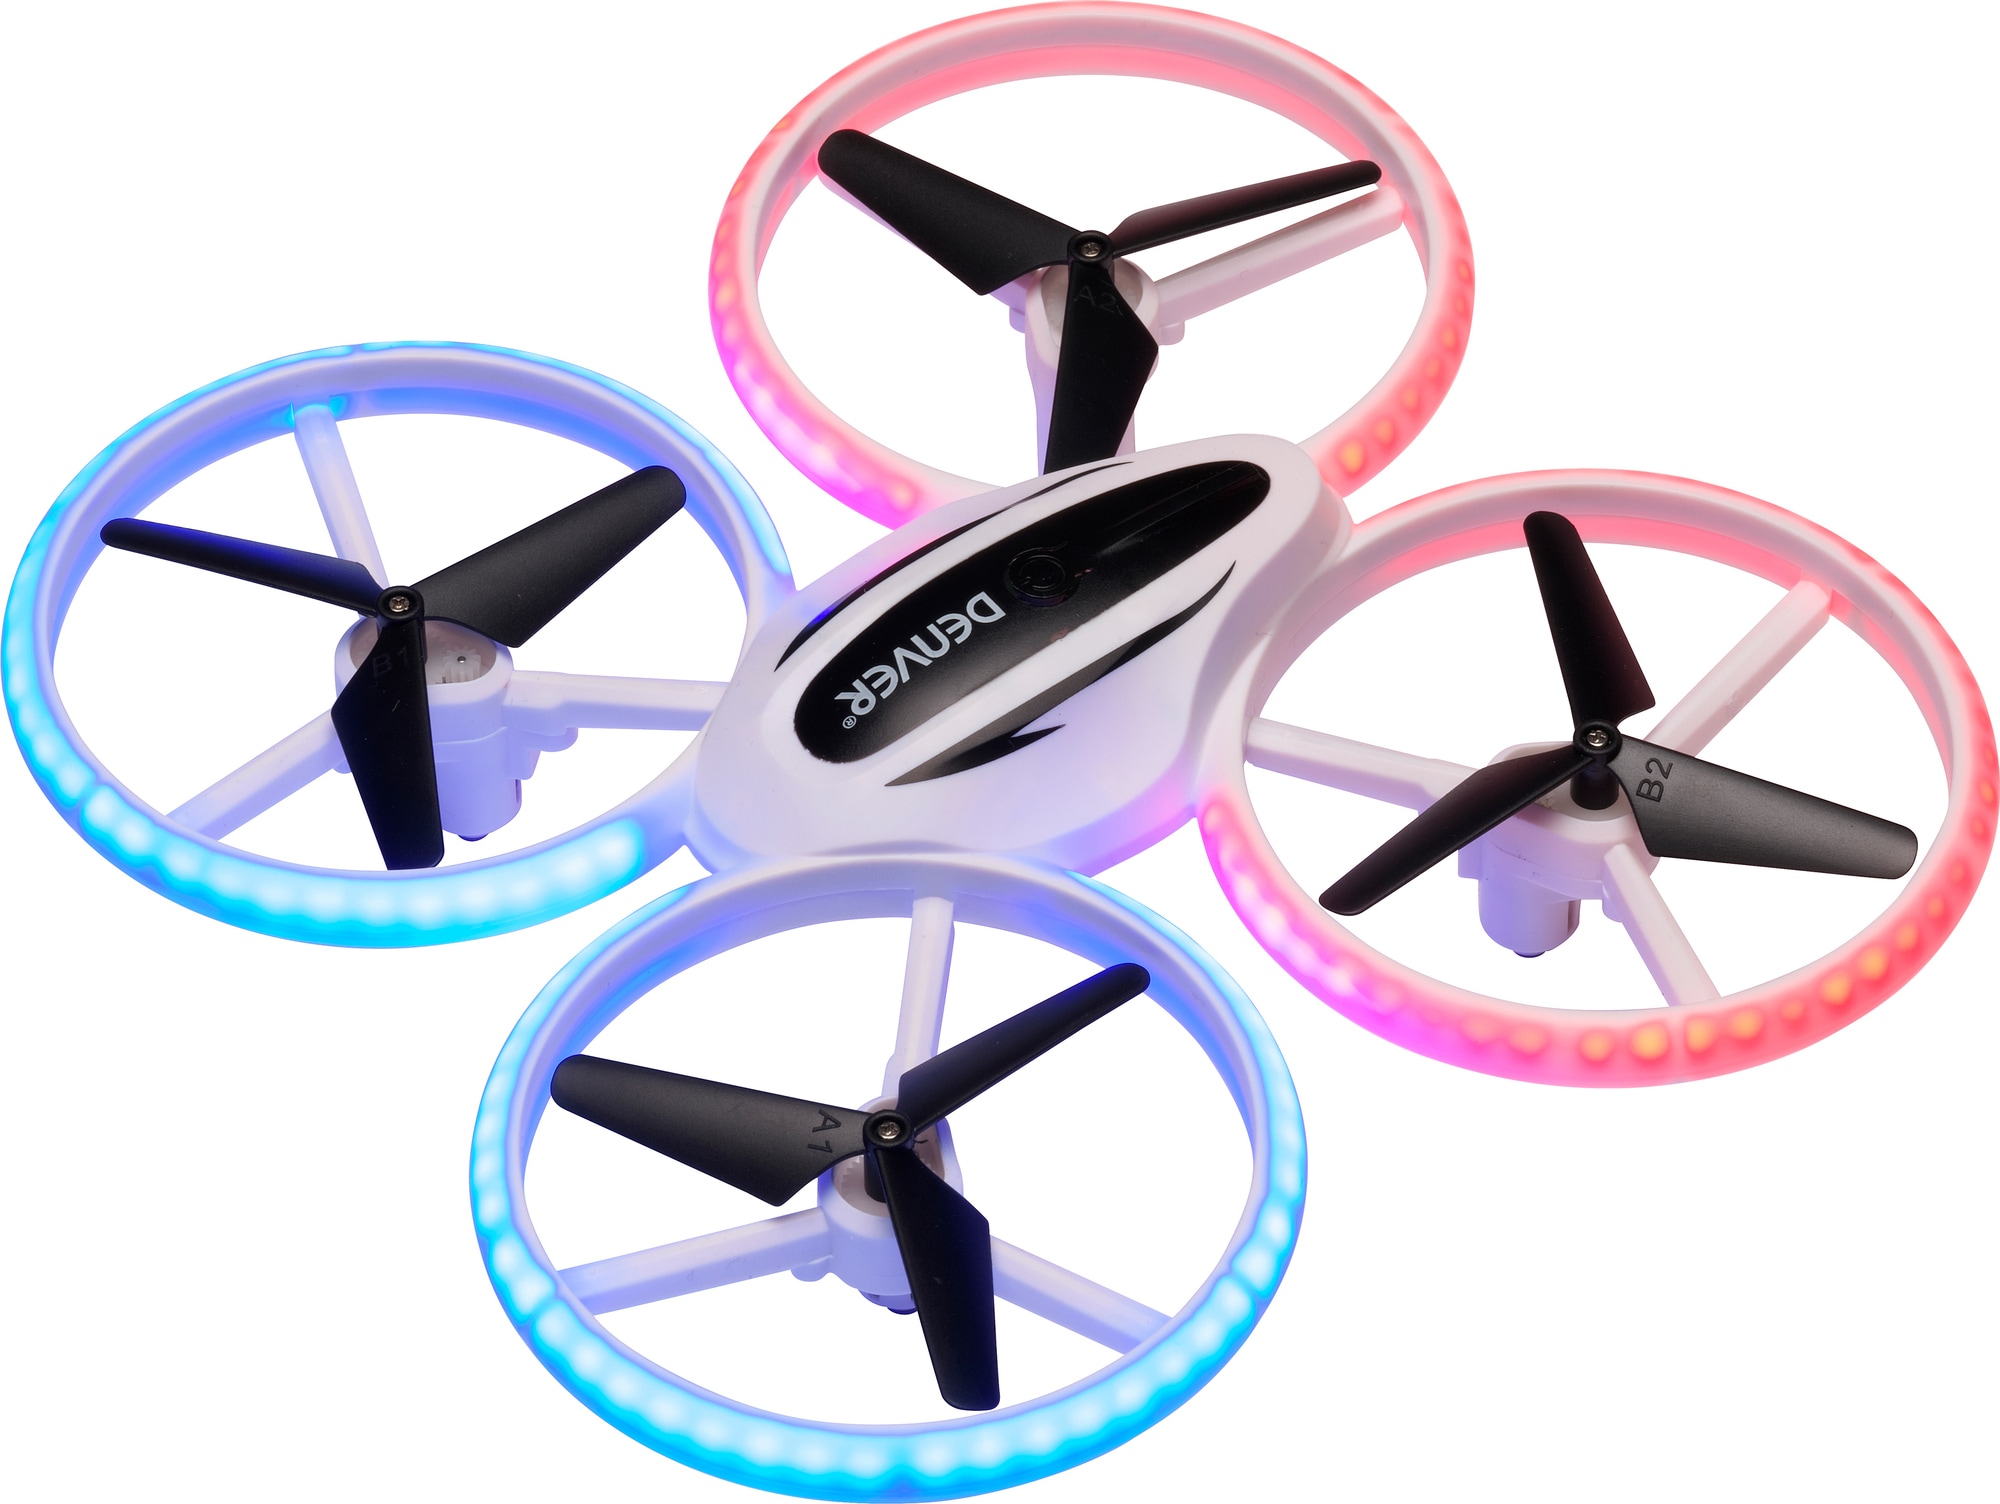 Denver DRO-200 drone | Elgiganten